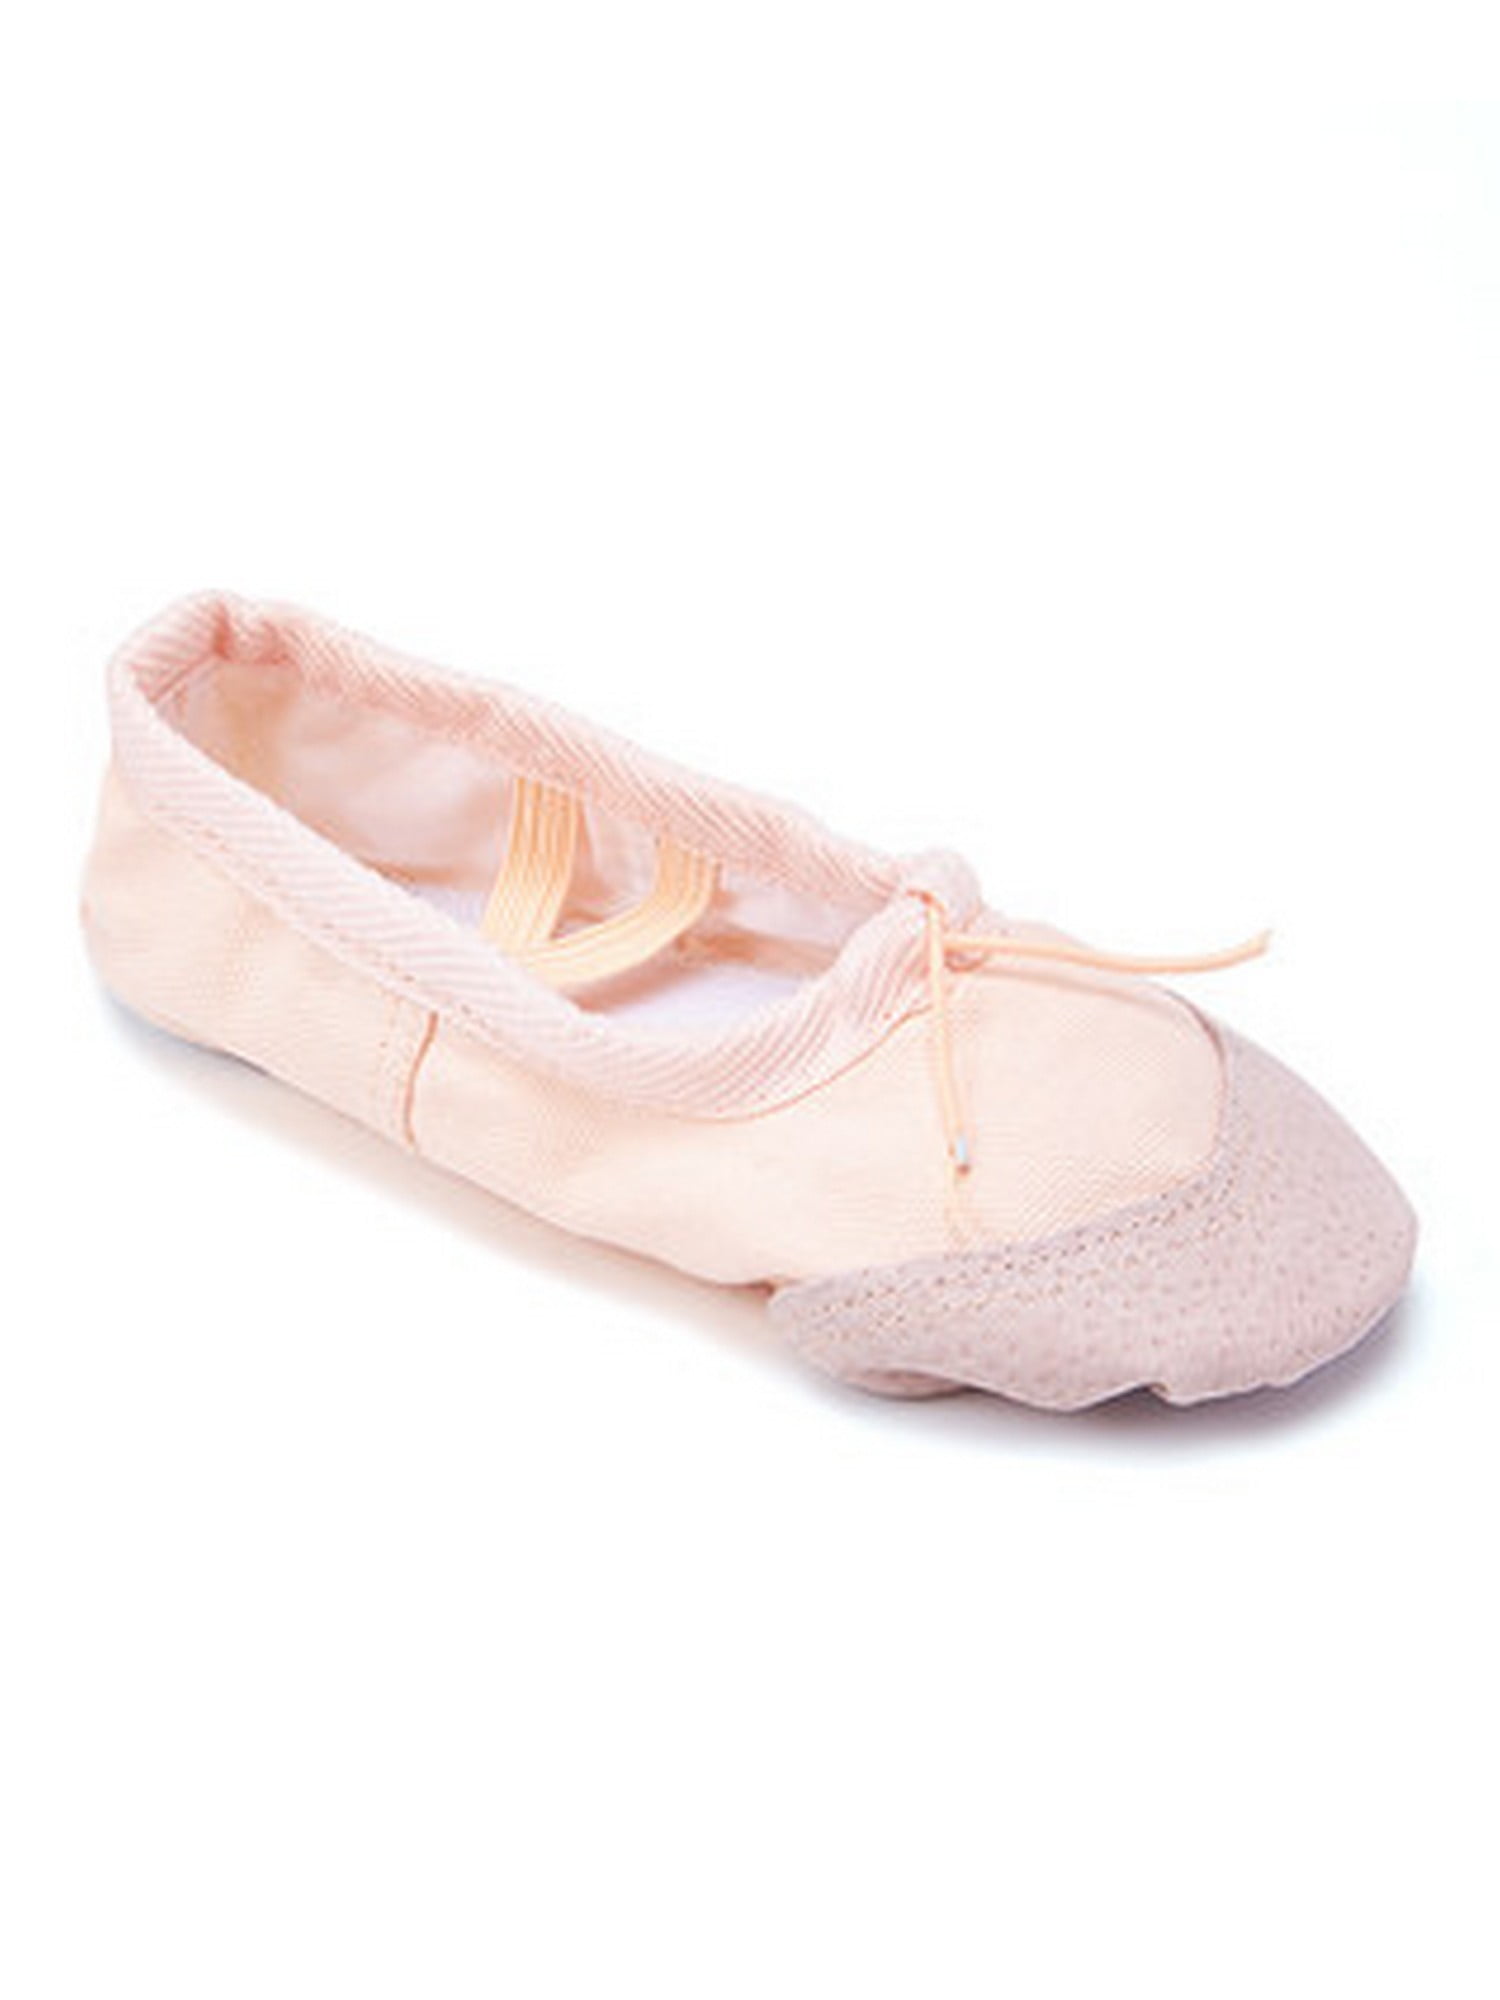 tan ballet shoes